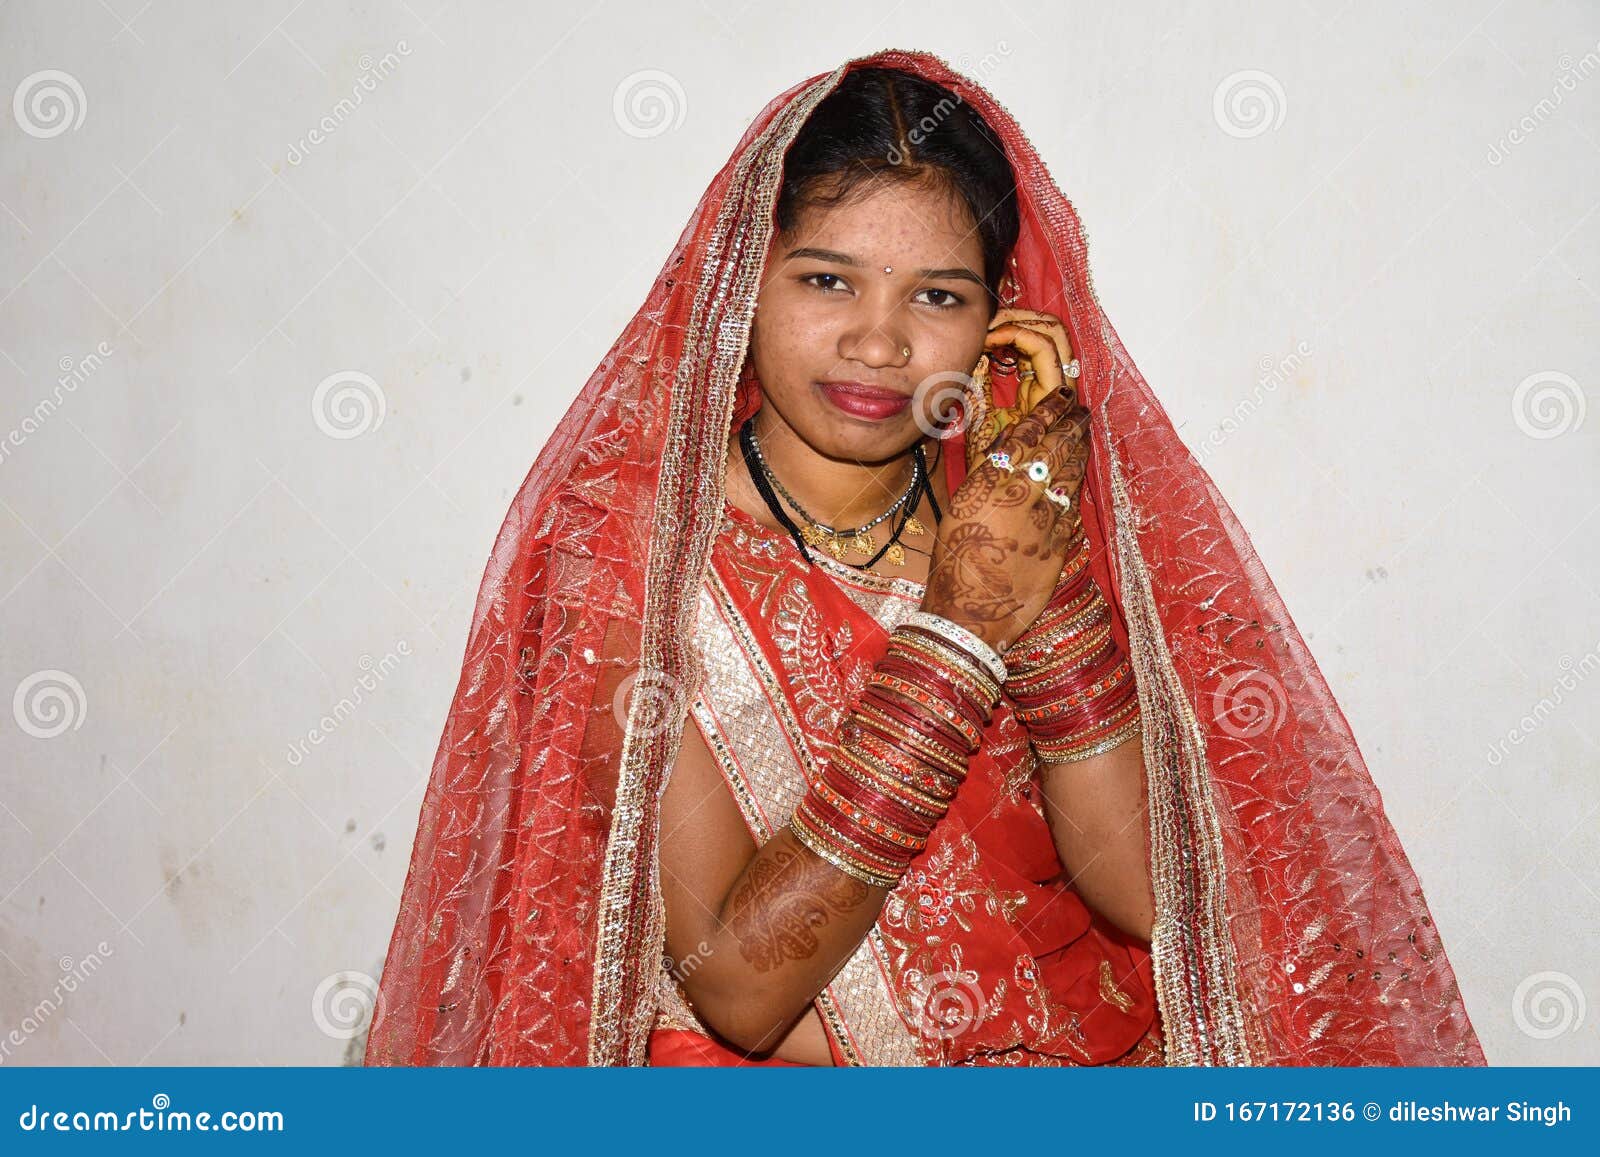 Dulhan, Bridal Model Photo Png Image Free Download | Graficsea